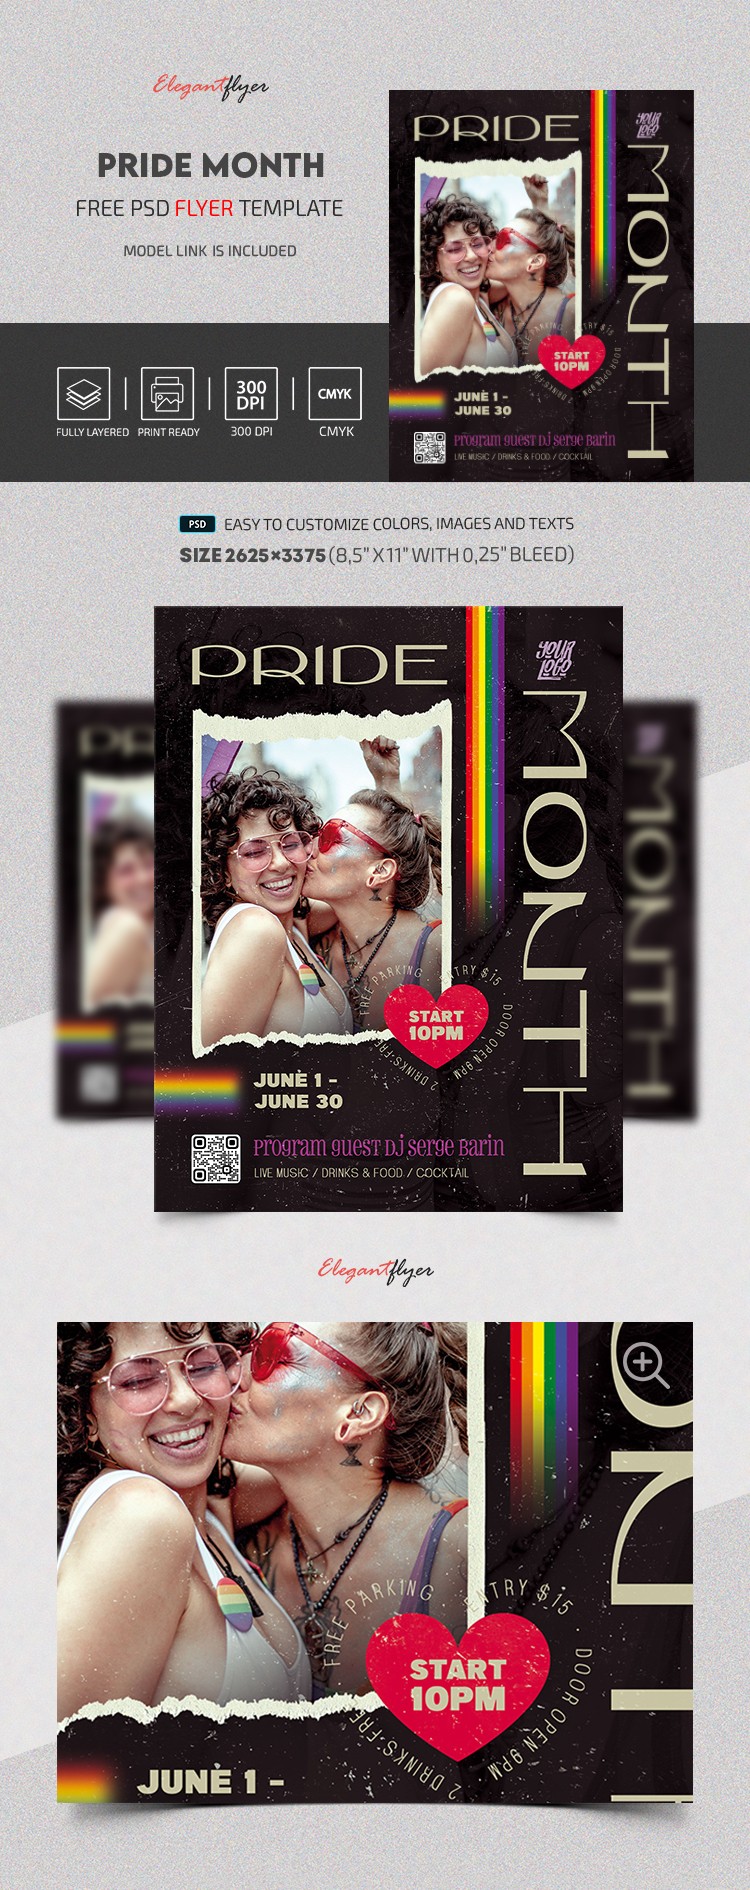 Pride Month - Free Flyer PSD Template by ElegantFlyer